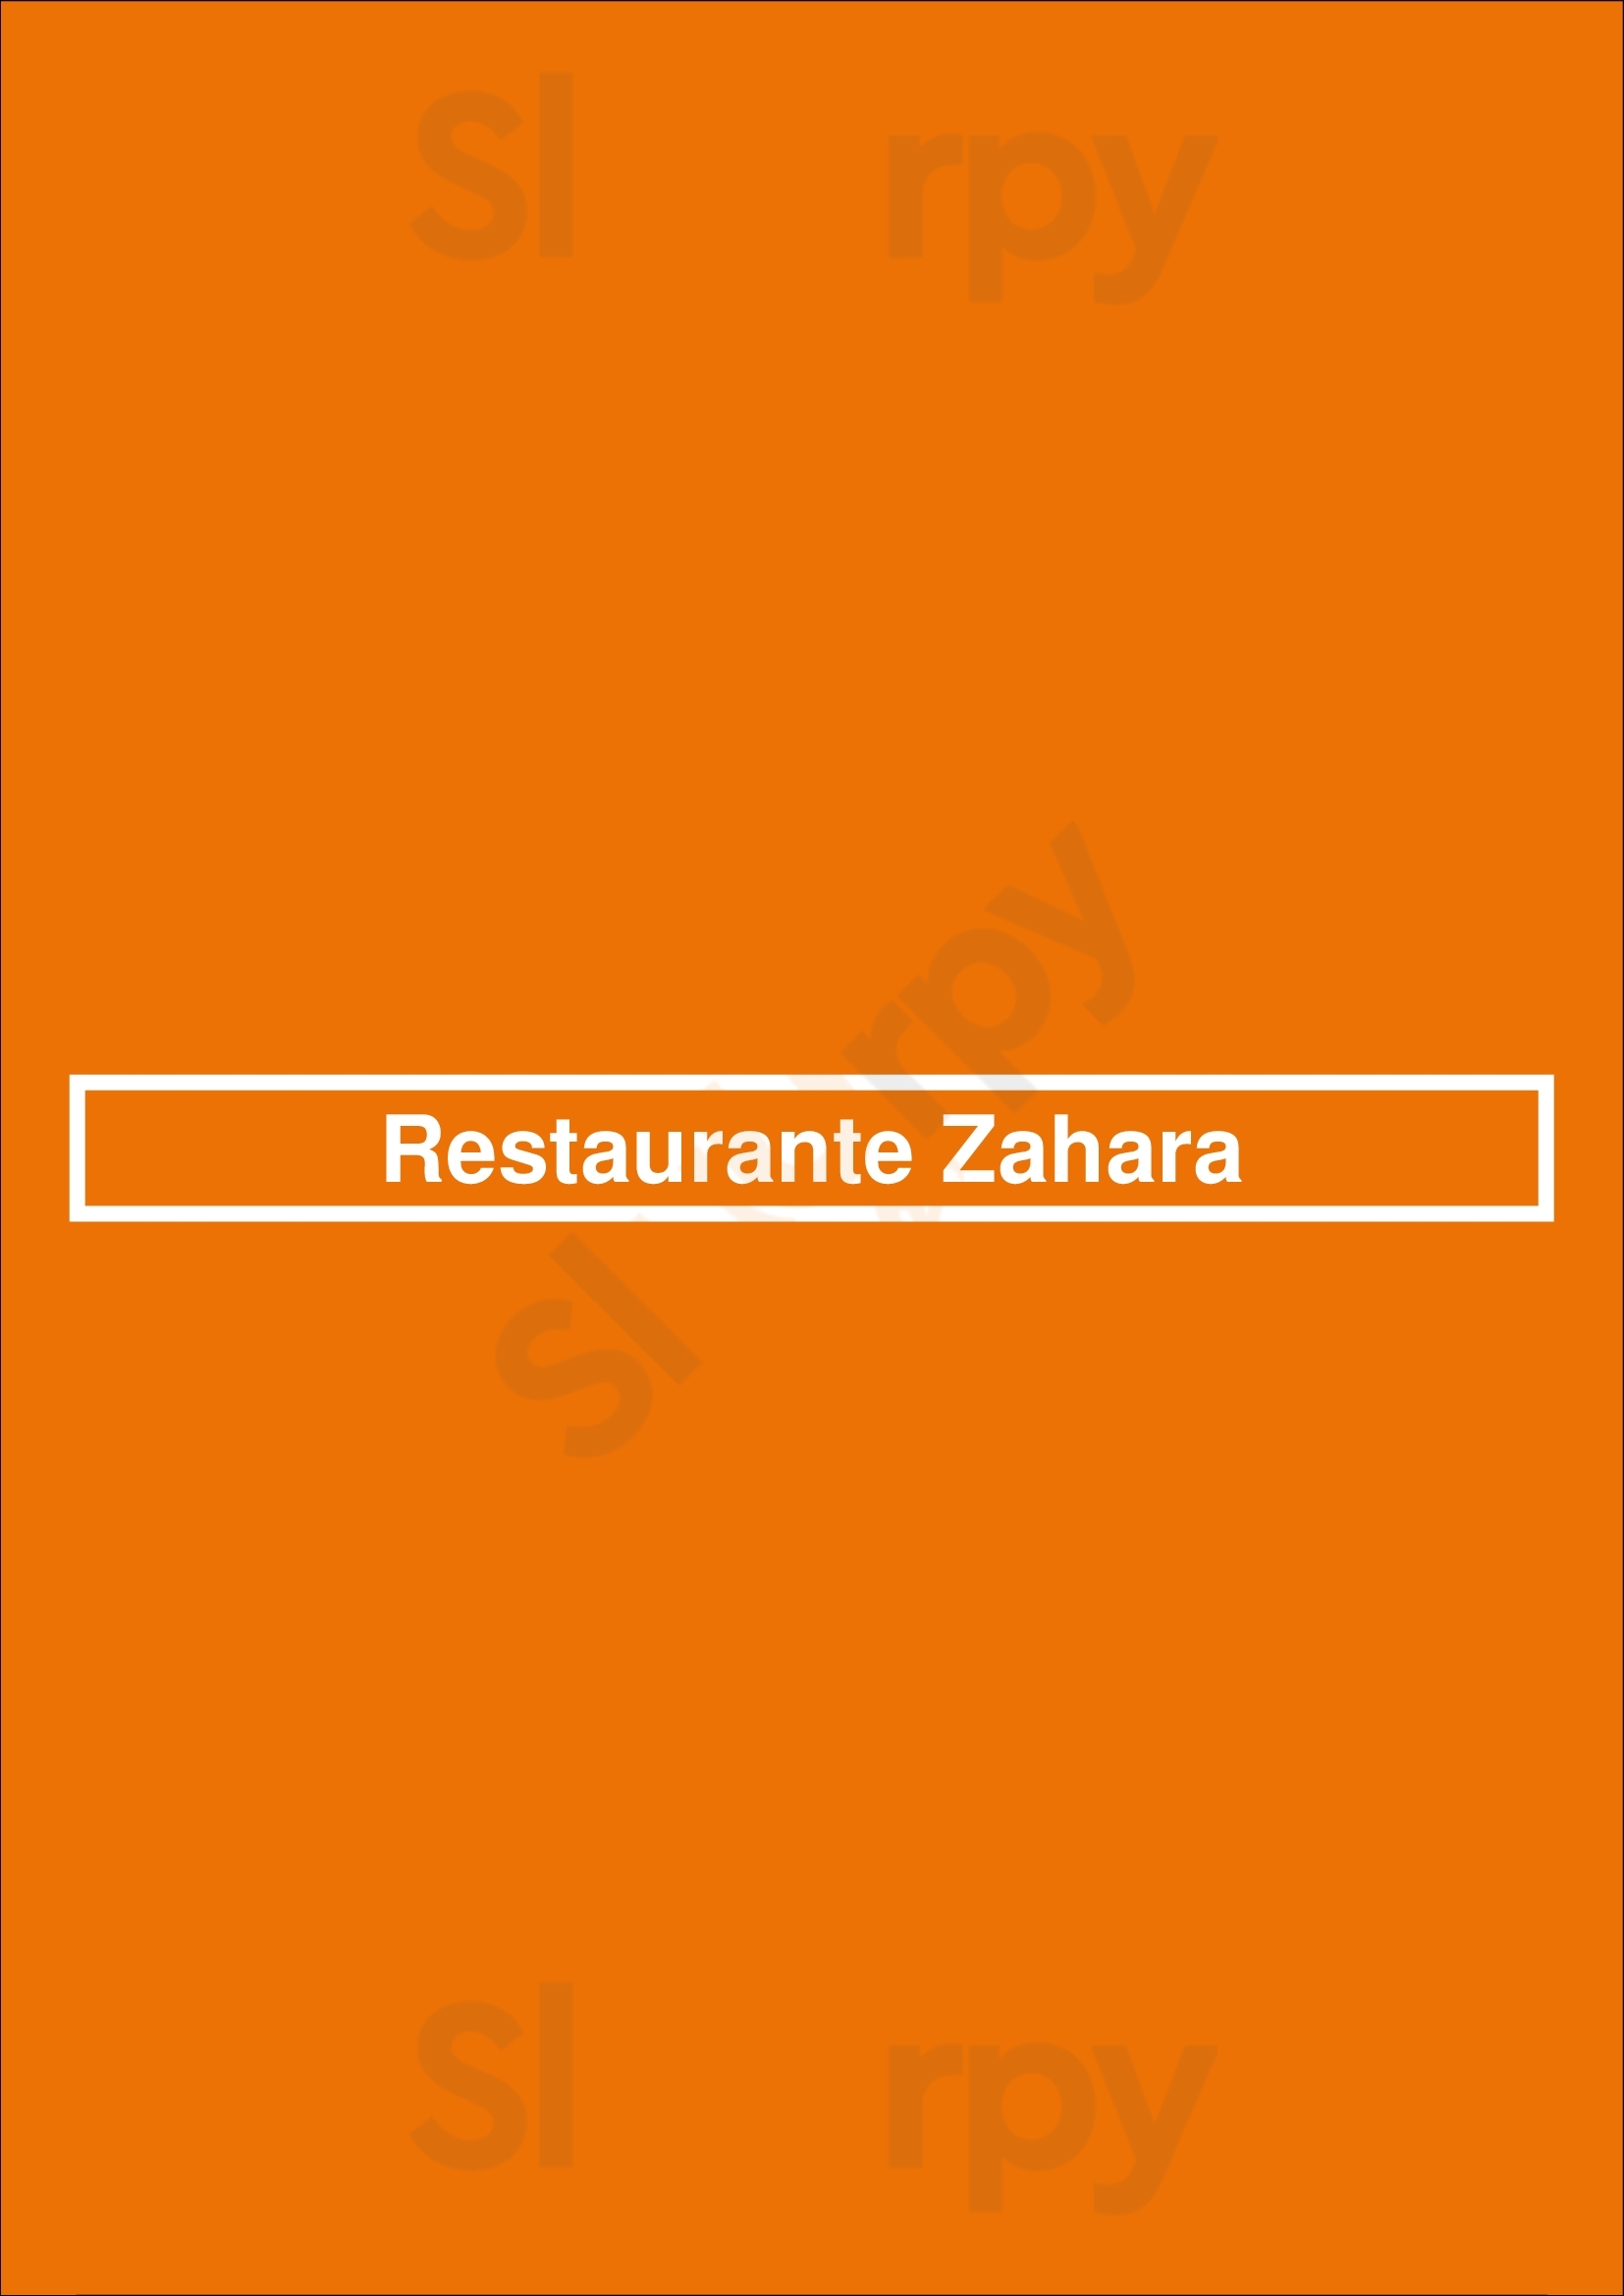 Restaurante Zahara Madrid Menu - 1